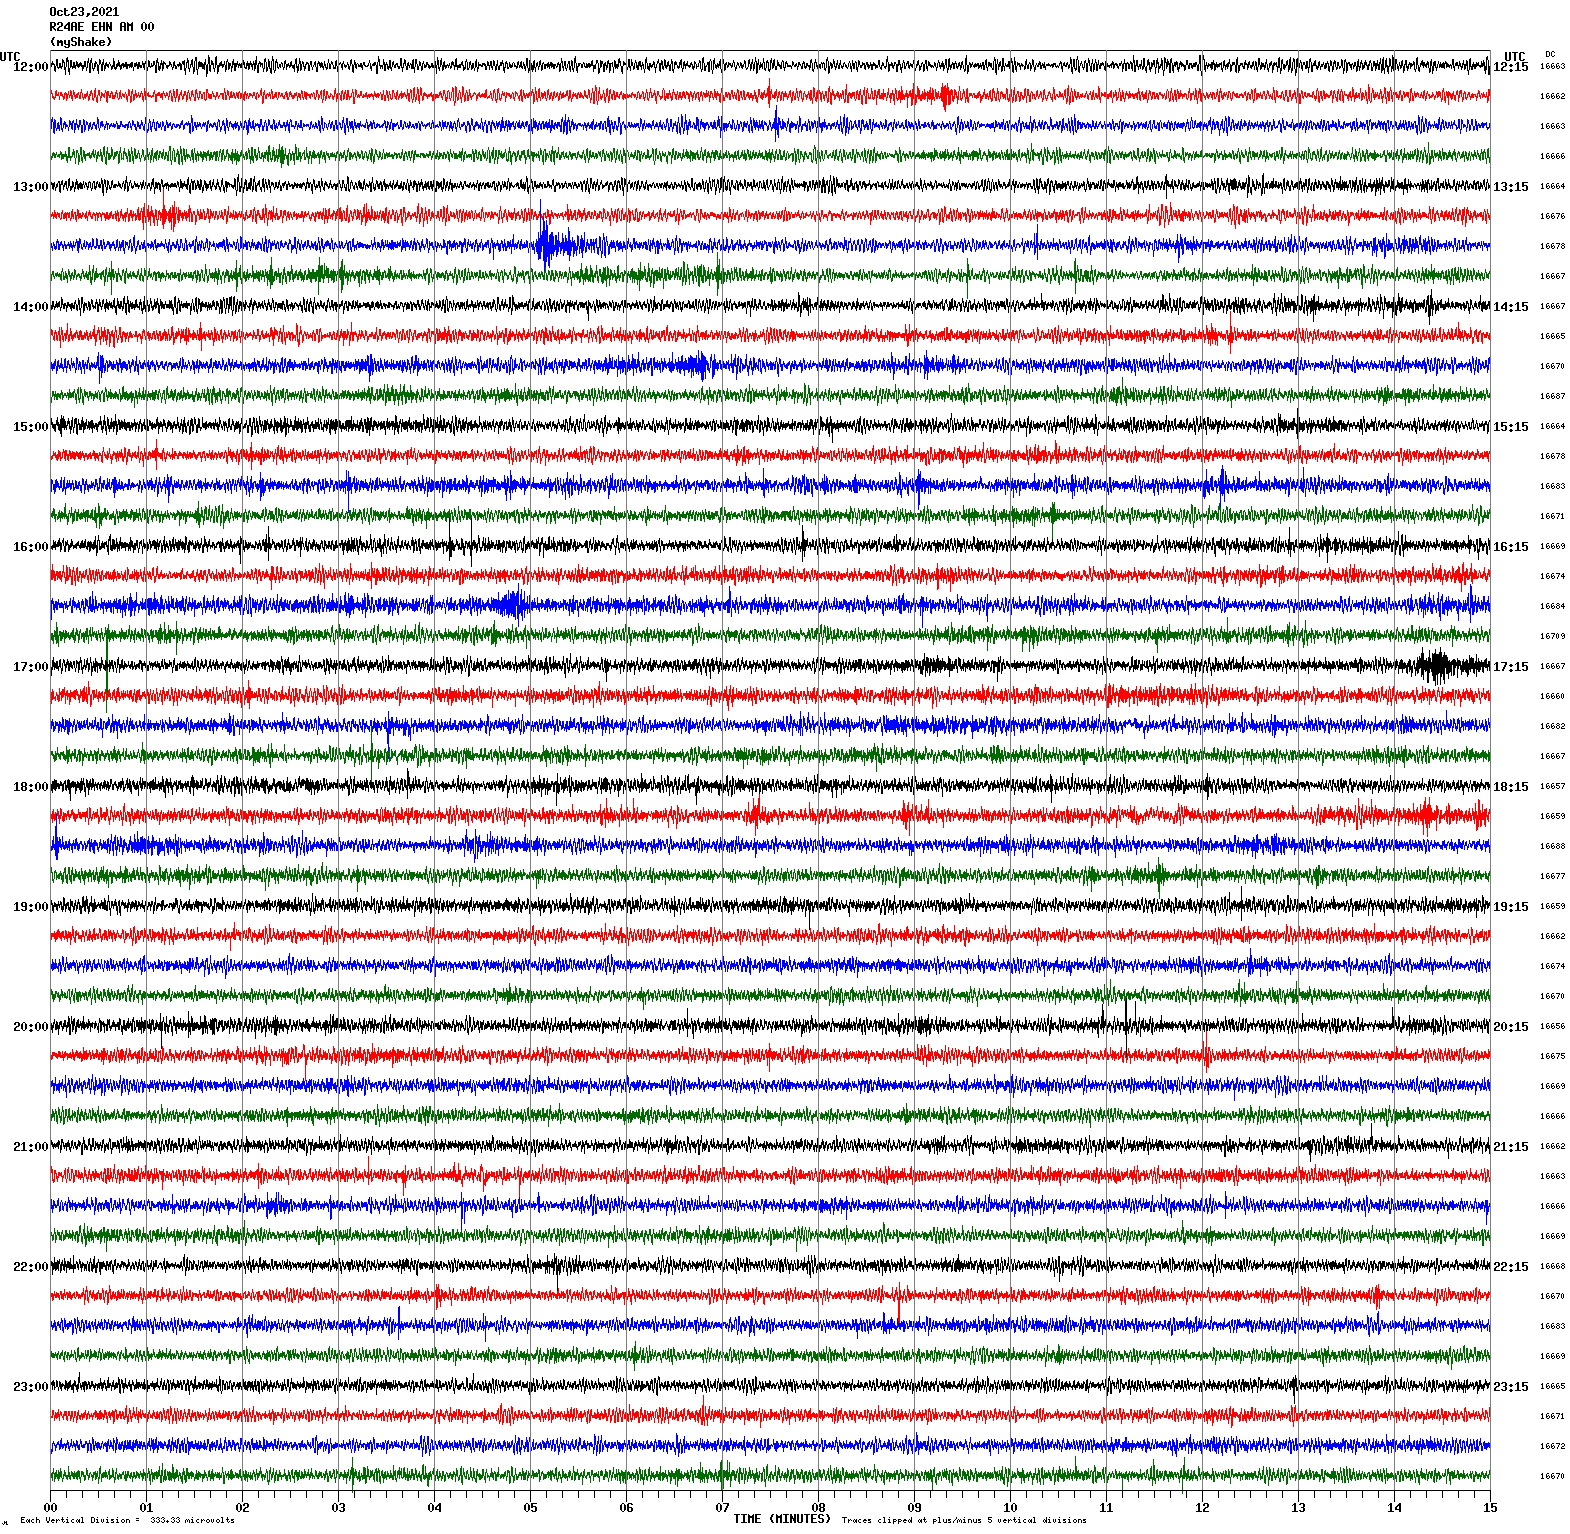 /seismic-data/R24AE/R24AE_EHN_AM_00.2021102312.gif